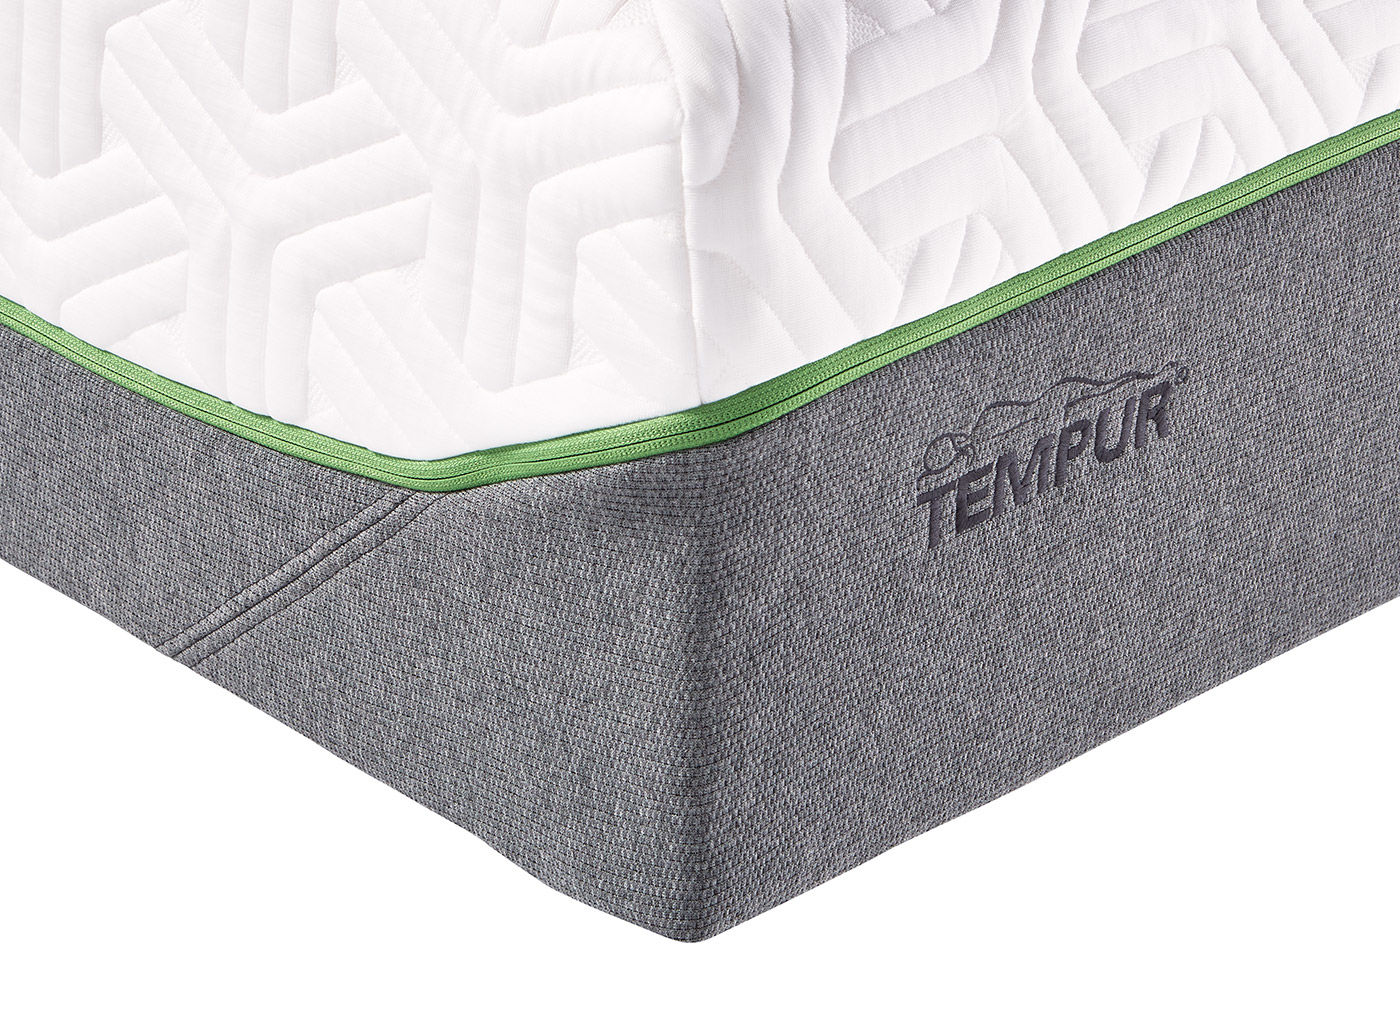 tempur cool touch mattress sale